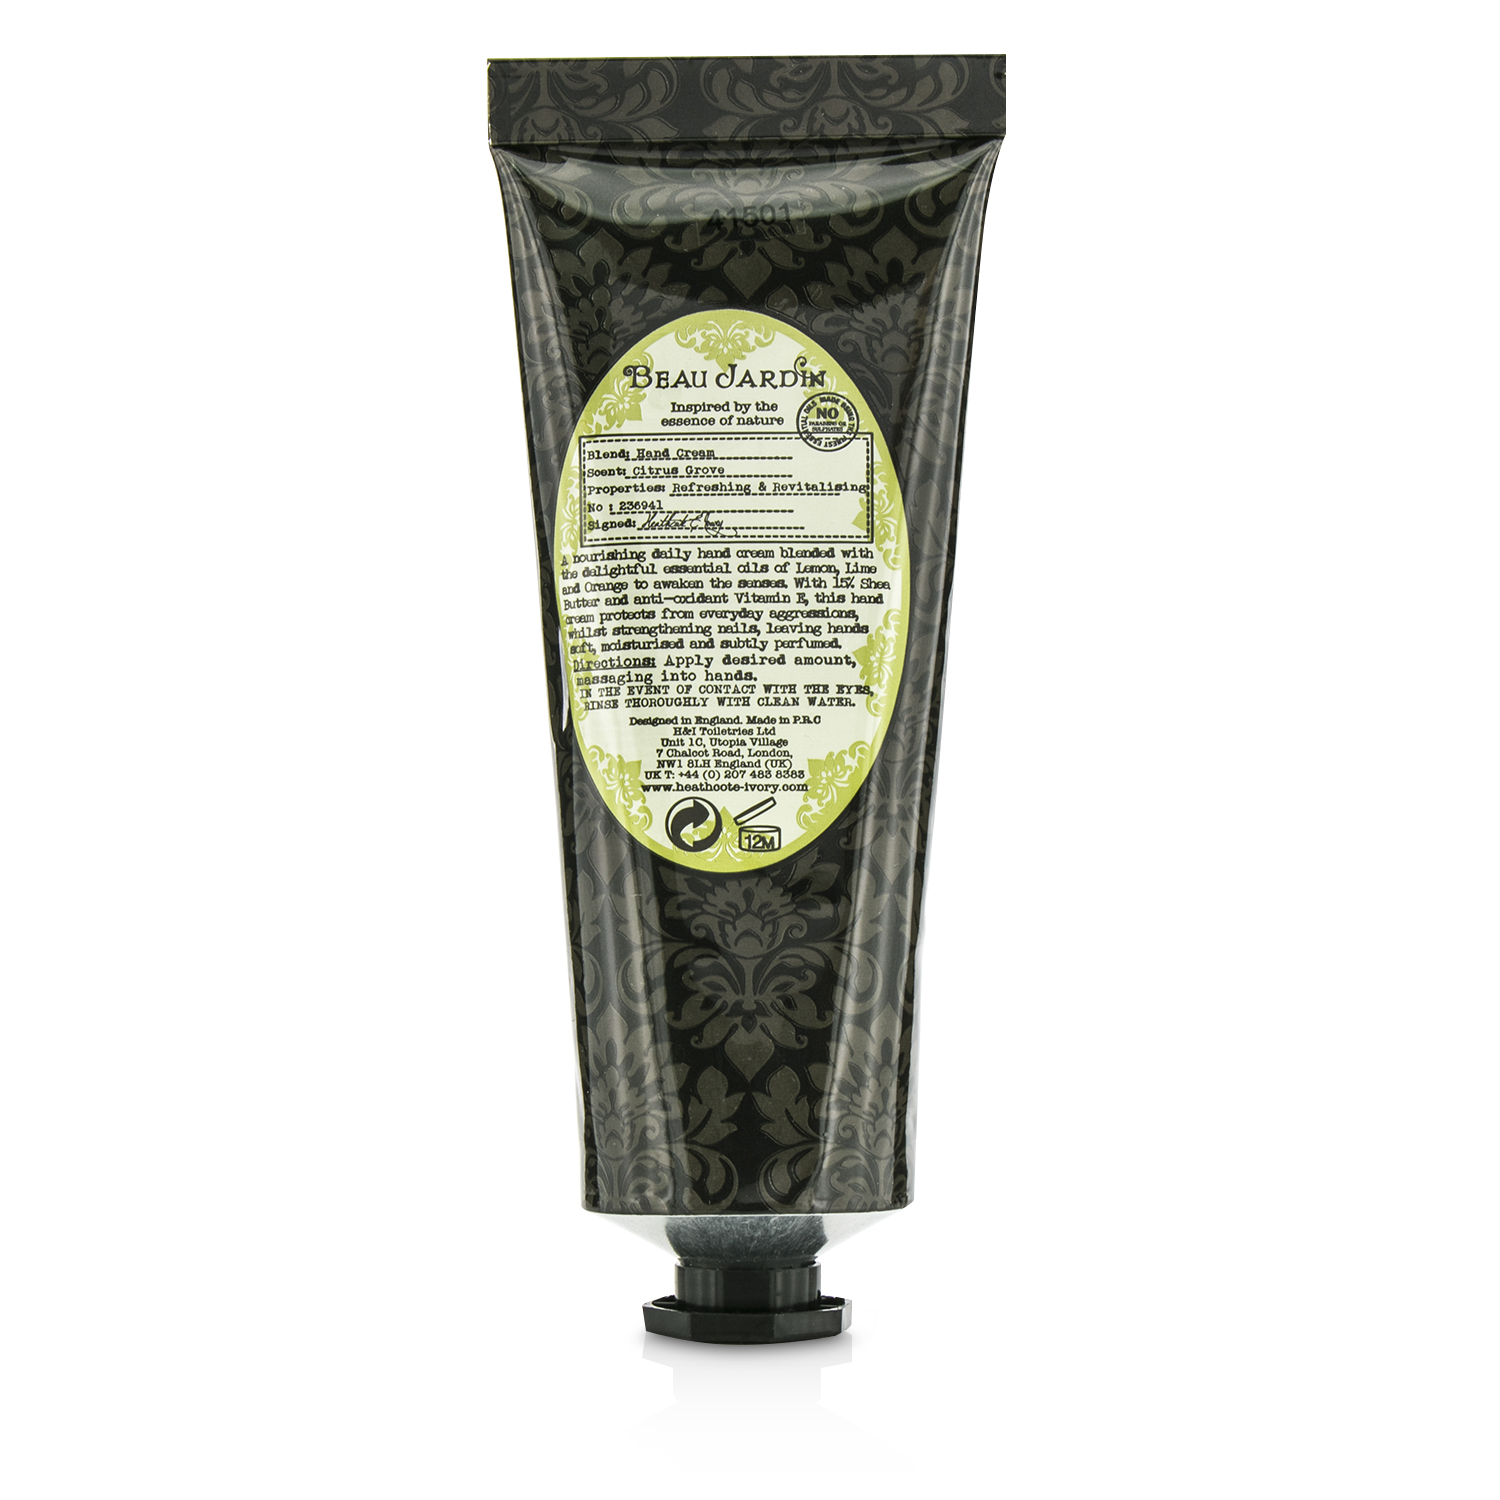 Heathcote & Ivory Beau Jardin Citrus Grove 15% Shea Butter Hand Cream 100ml/3.38oz